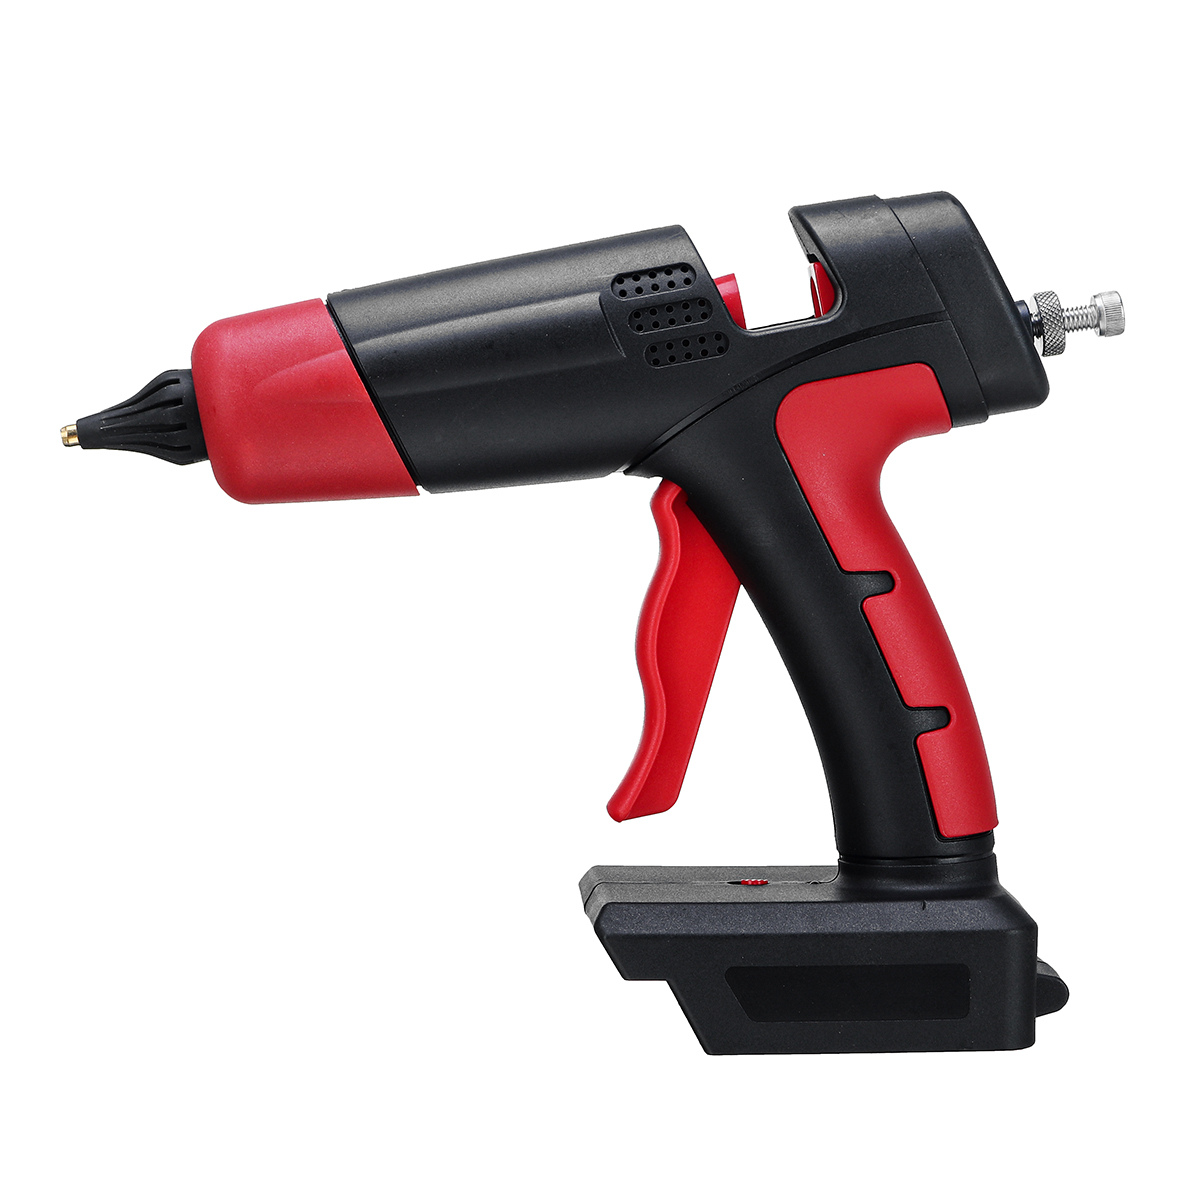 Hot-Melt-Glue-Guns-Cordless-Rechargeable-Hot-Glue-Applicator-Home-Improvement-Craft-DIY-For-Makita-B-1903421-12